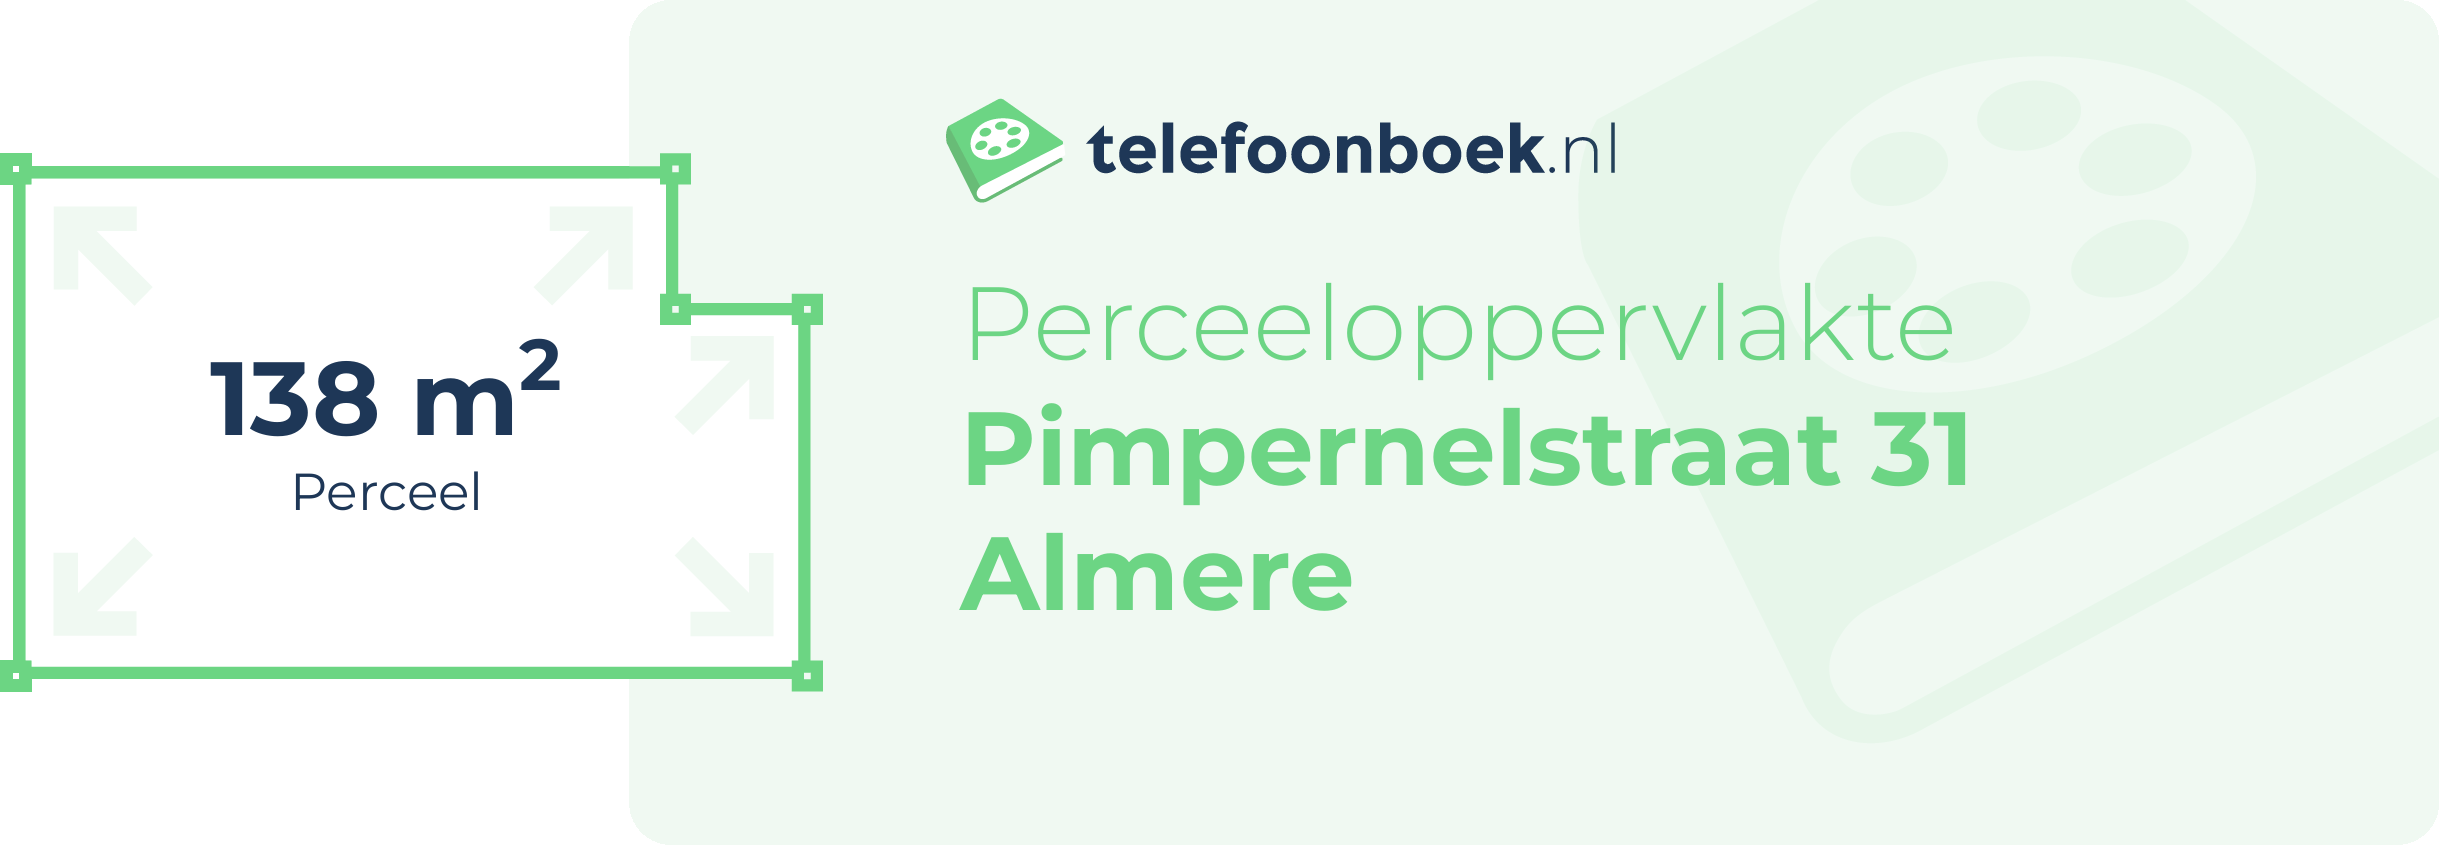 Perceeloppervlakte Pimpernelstraat 31 Almere